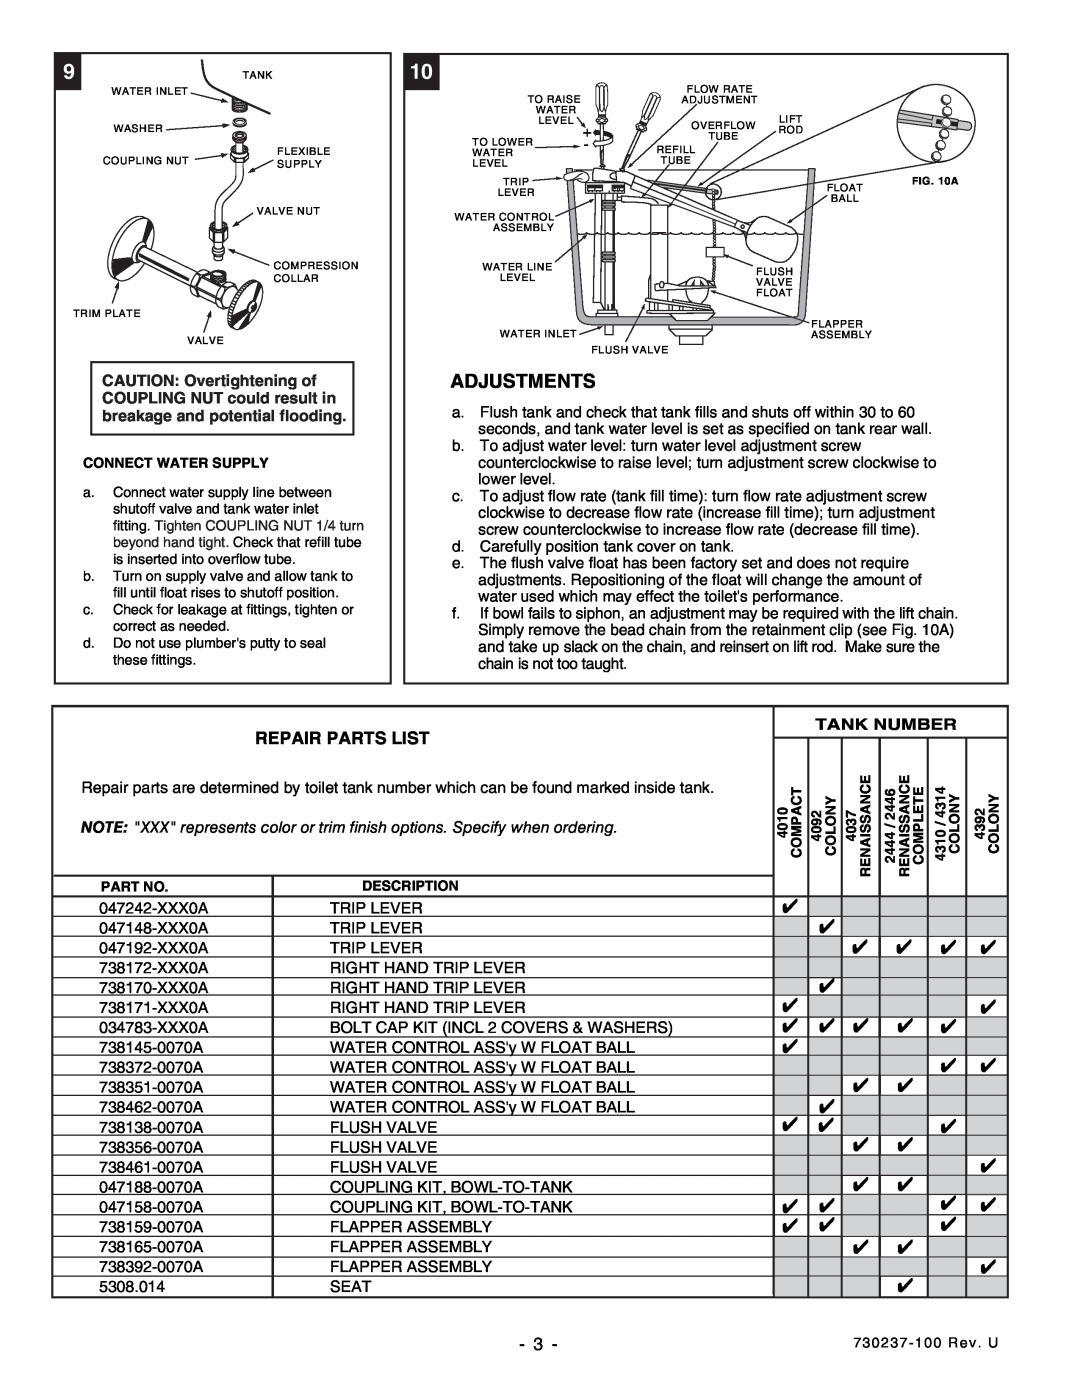 American Standard 2444 dimensions Adjustments, Repair Parts List, Tank Number 